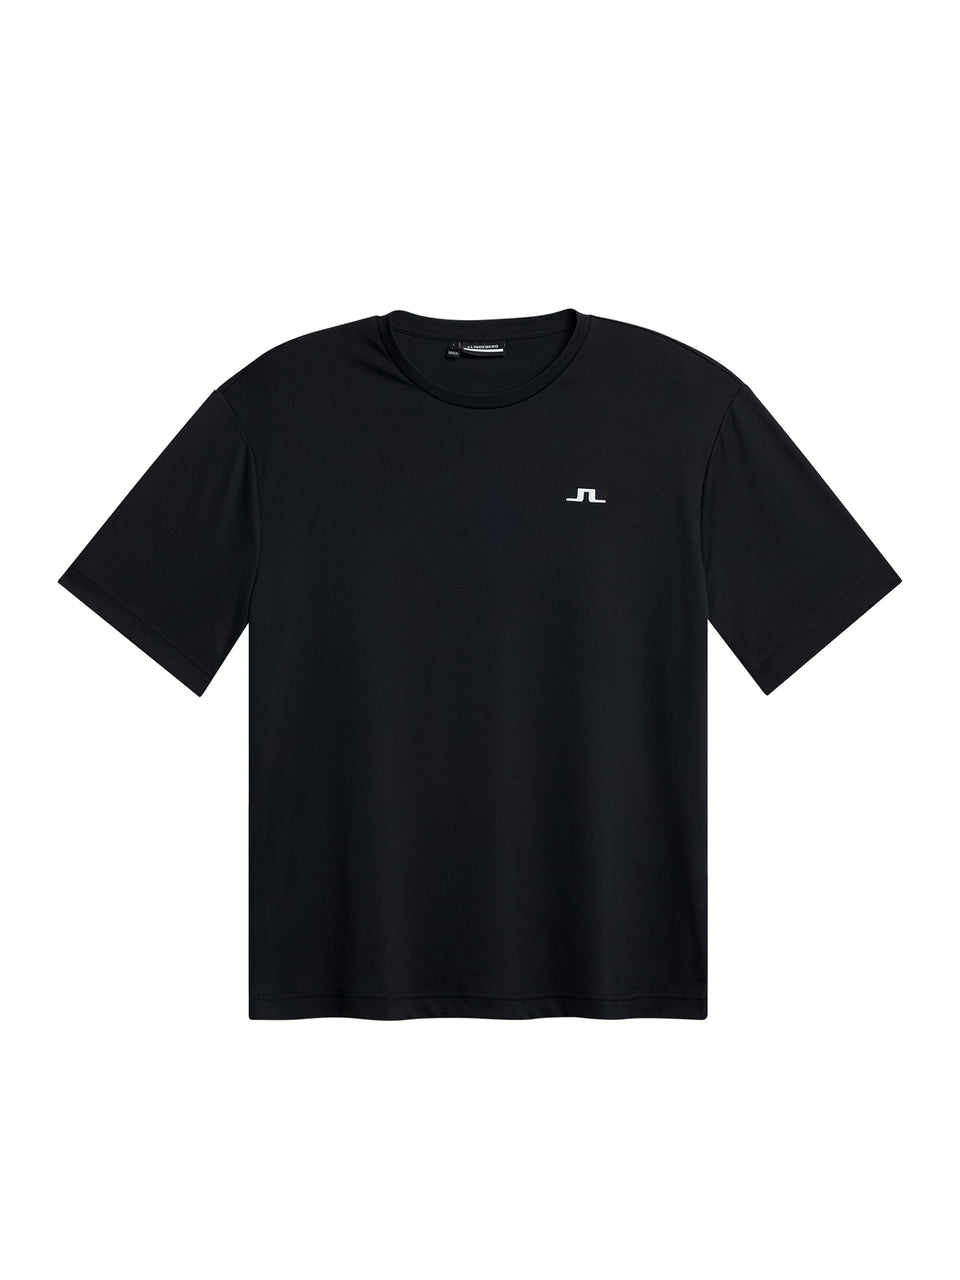 Ade T-shirt / Black